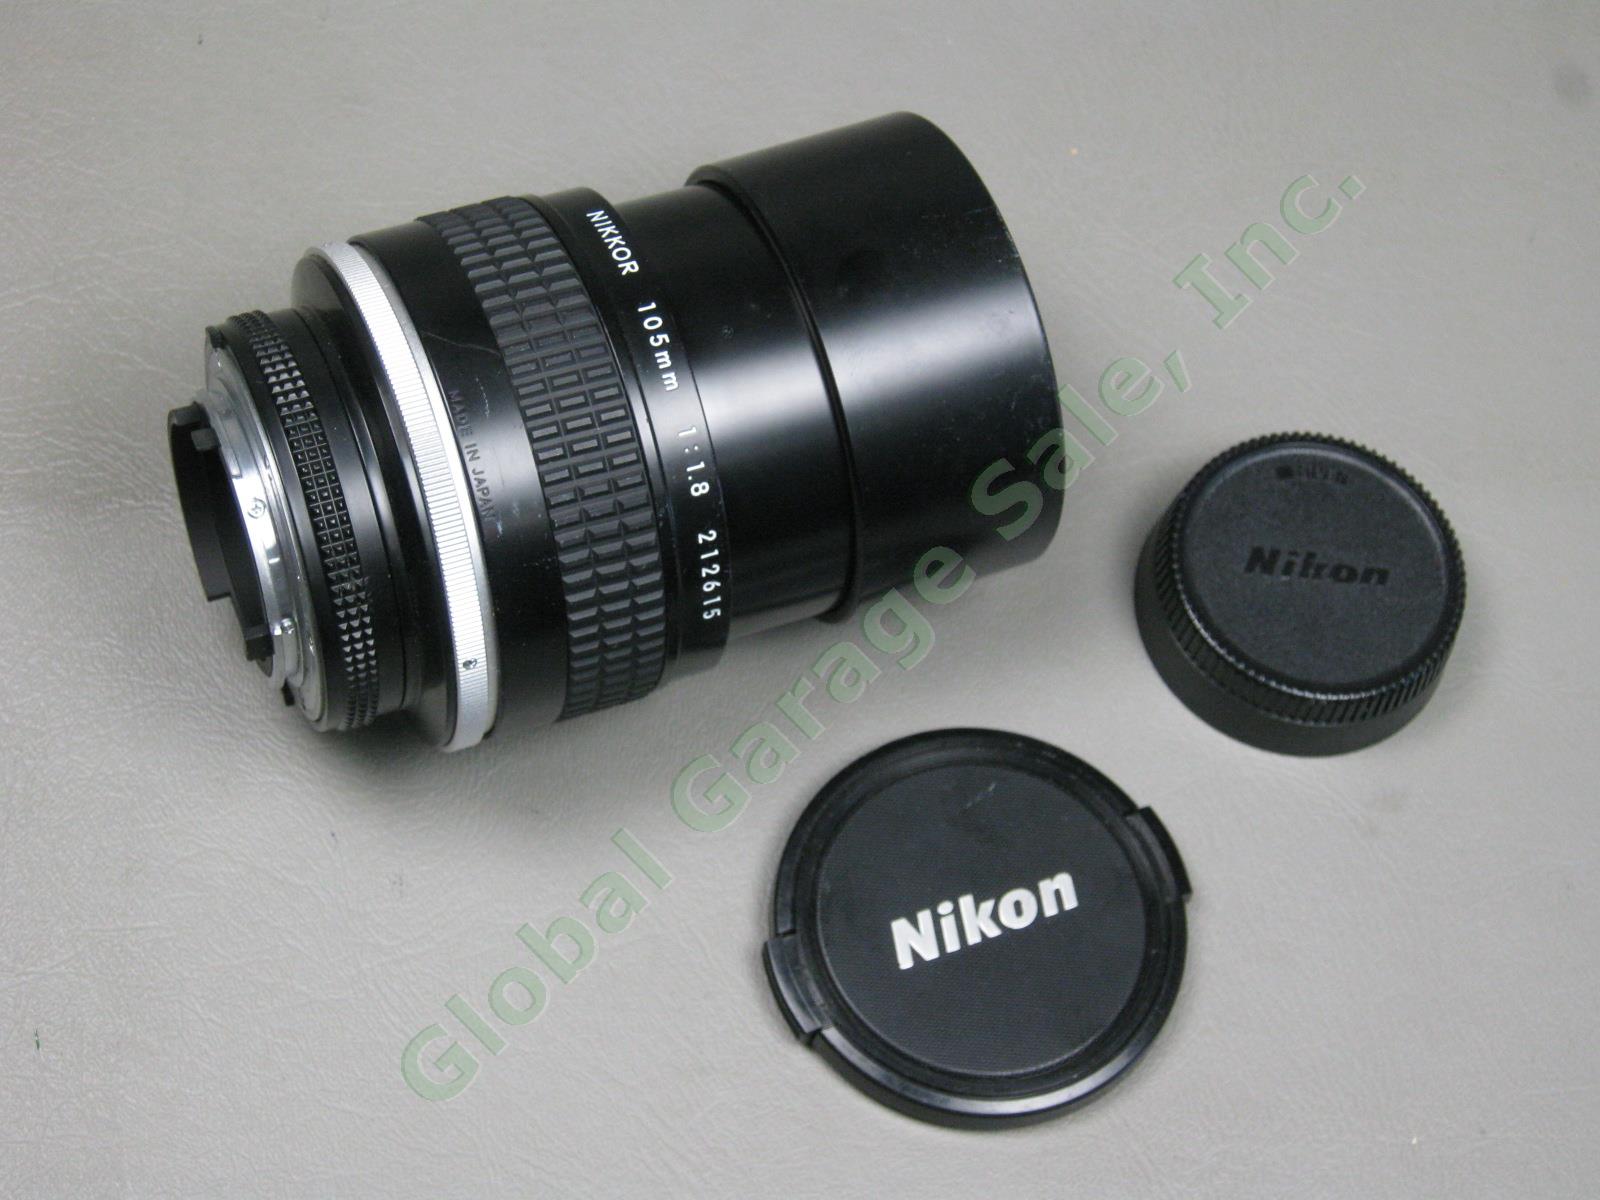 Nikon Nikkor 105mm 1:1.8 f/1.8 Telephoto Camera Lens #212615 Nice! No Reserve! 5